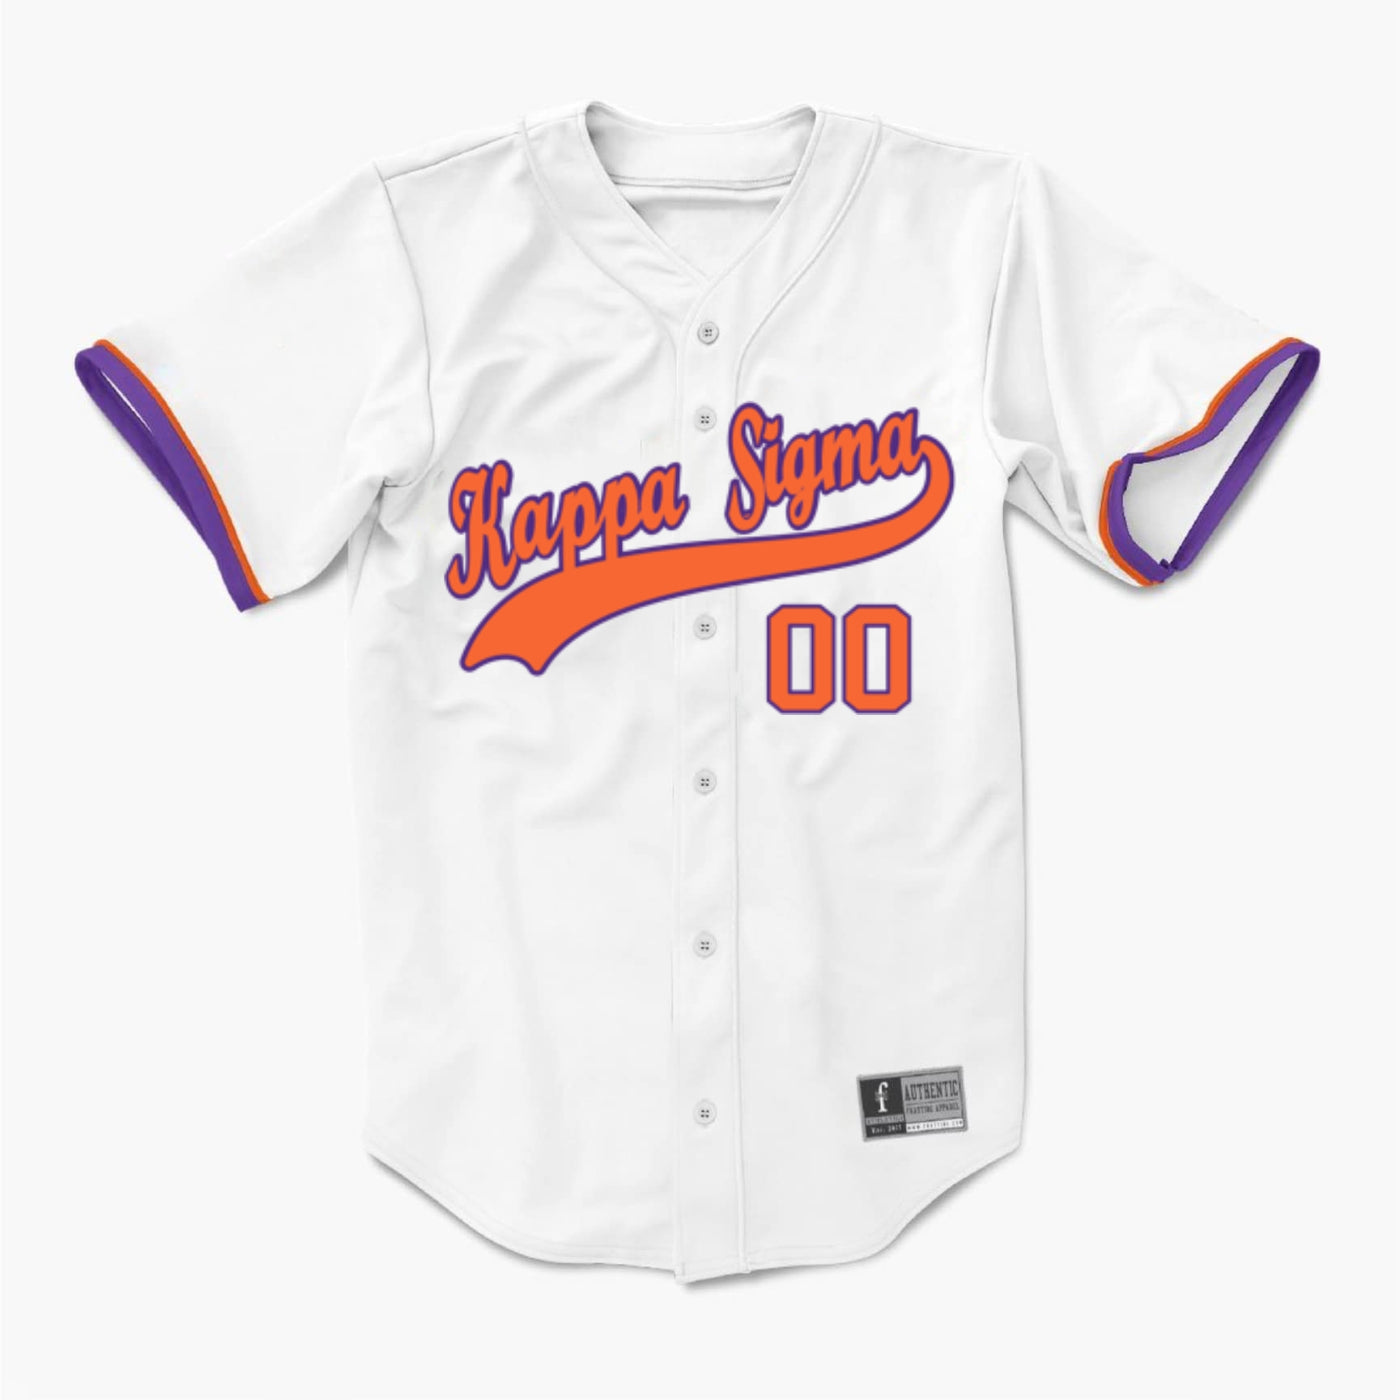 Kappa Sigma Baseball